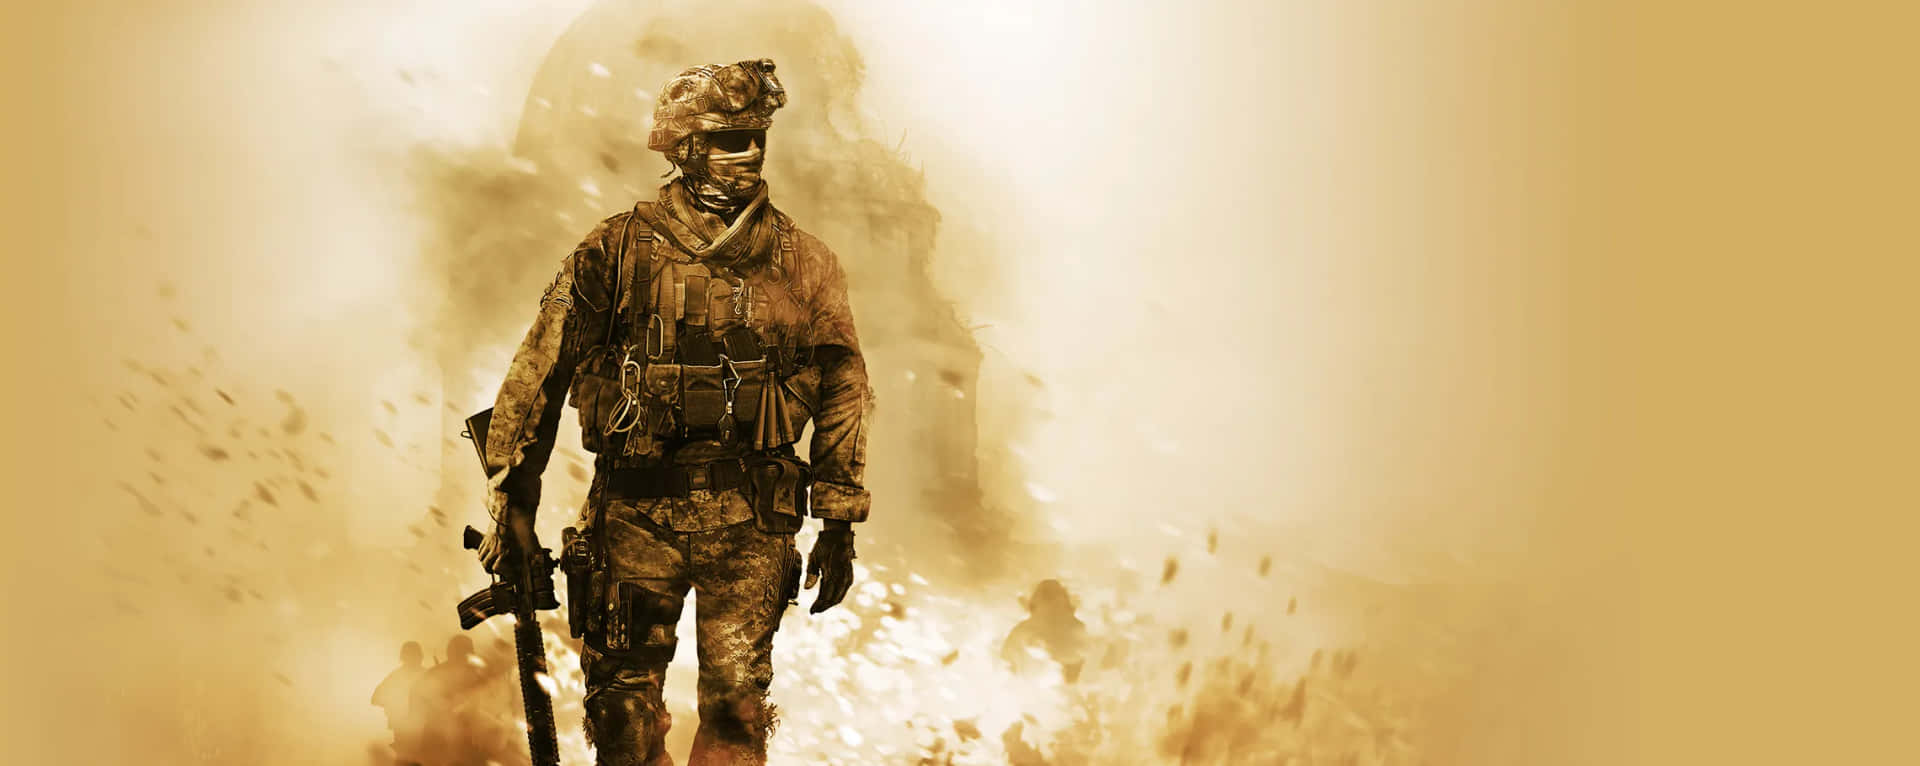 Lever dit krigszone-handlingsliv ud i Call of Duty Modern Warfare Wallpaper